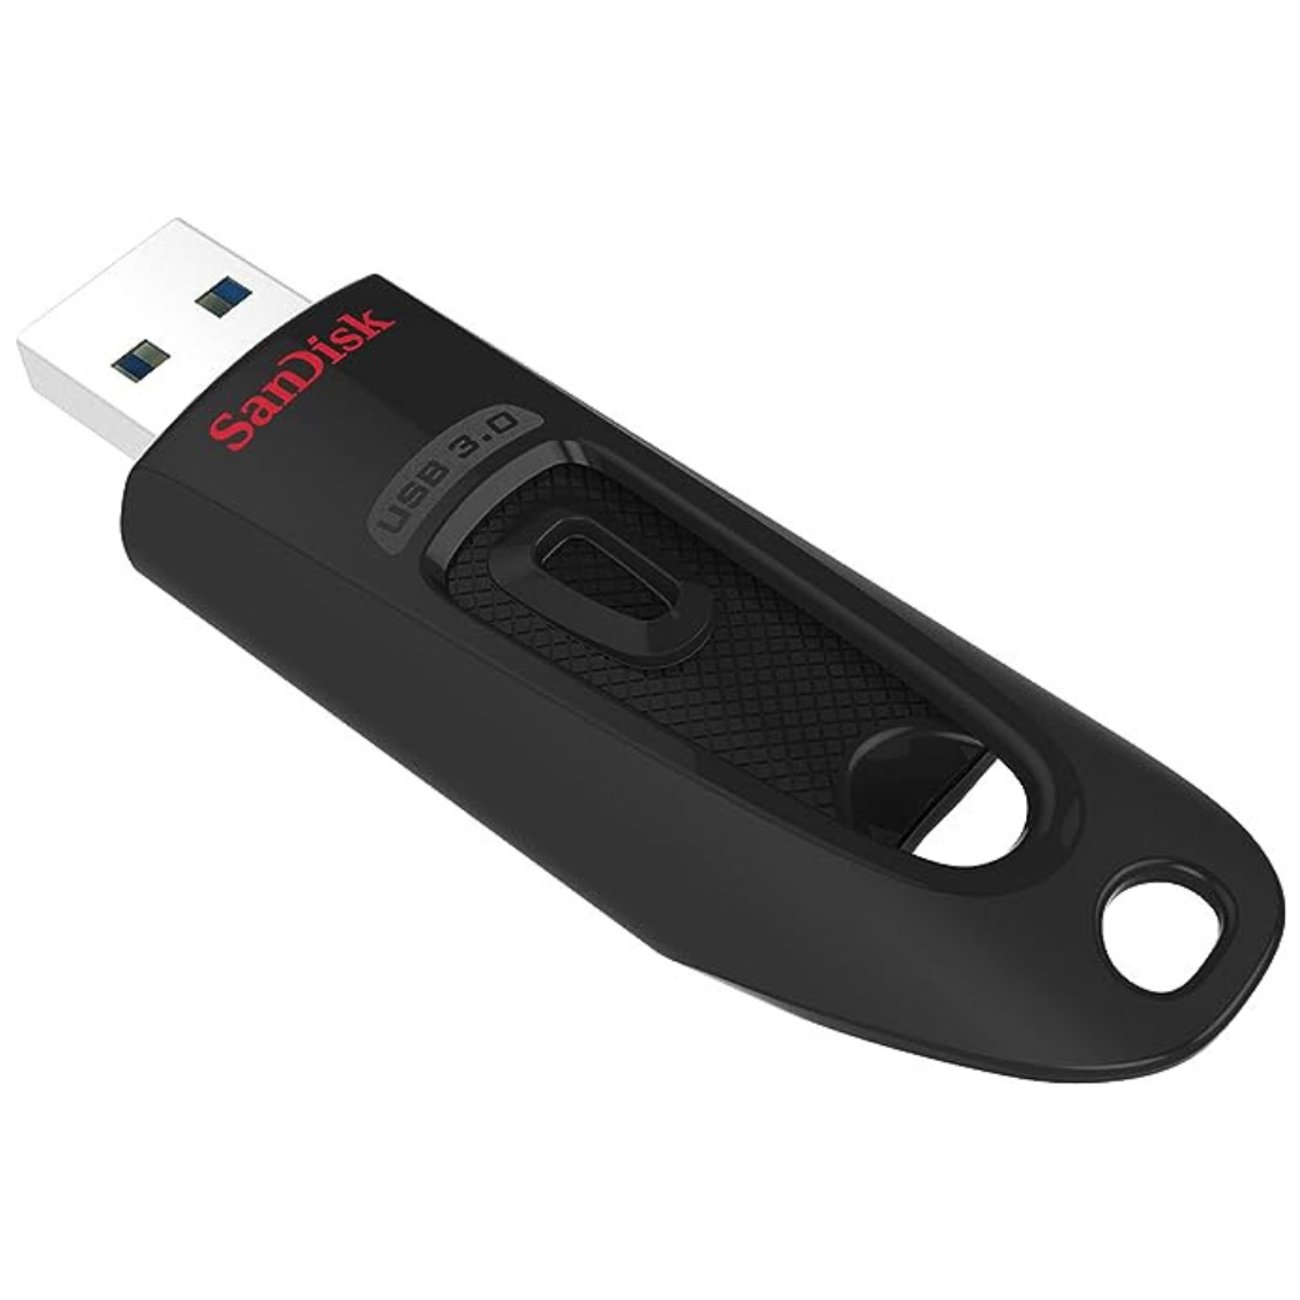 SanDisk: Ultra USB 3.0